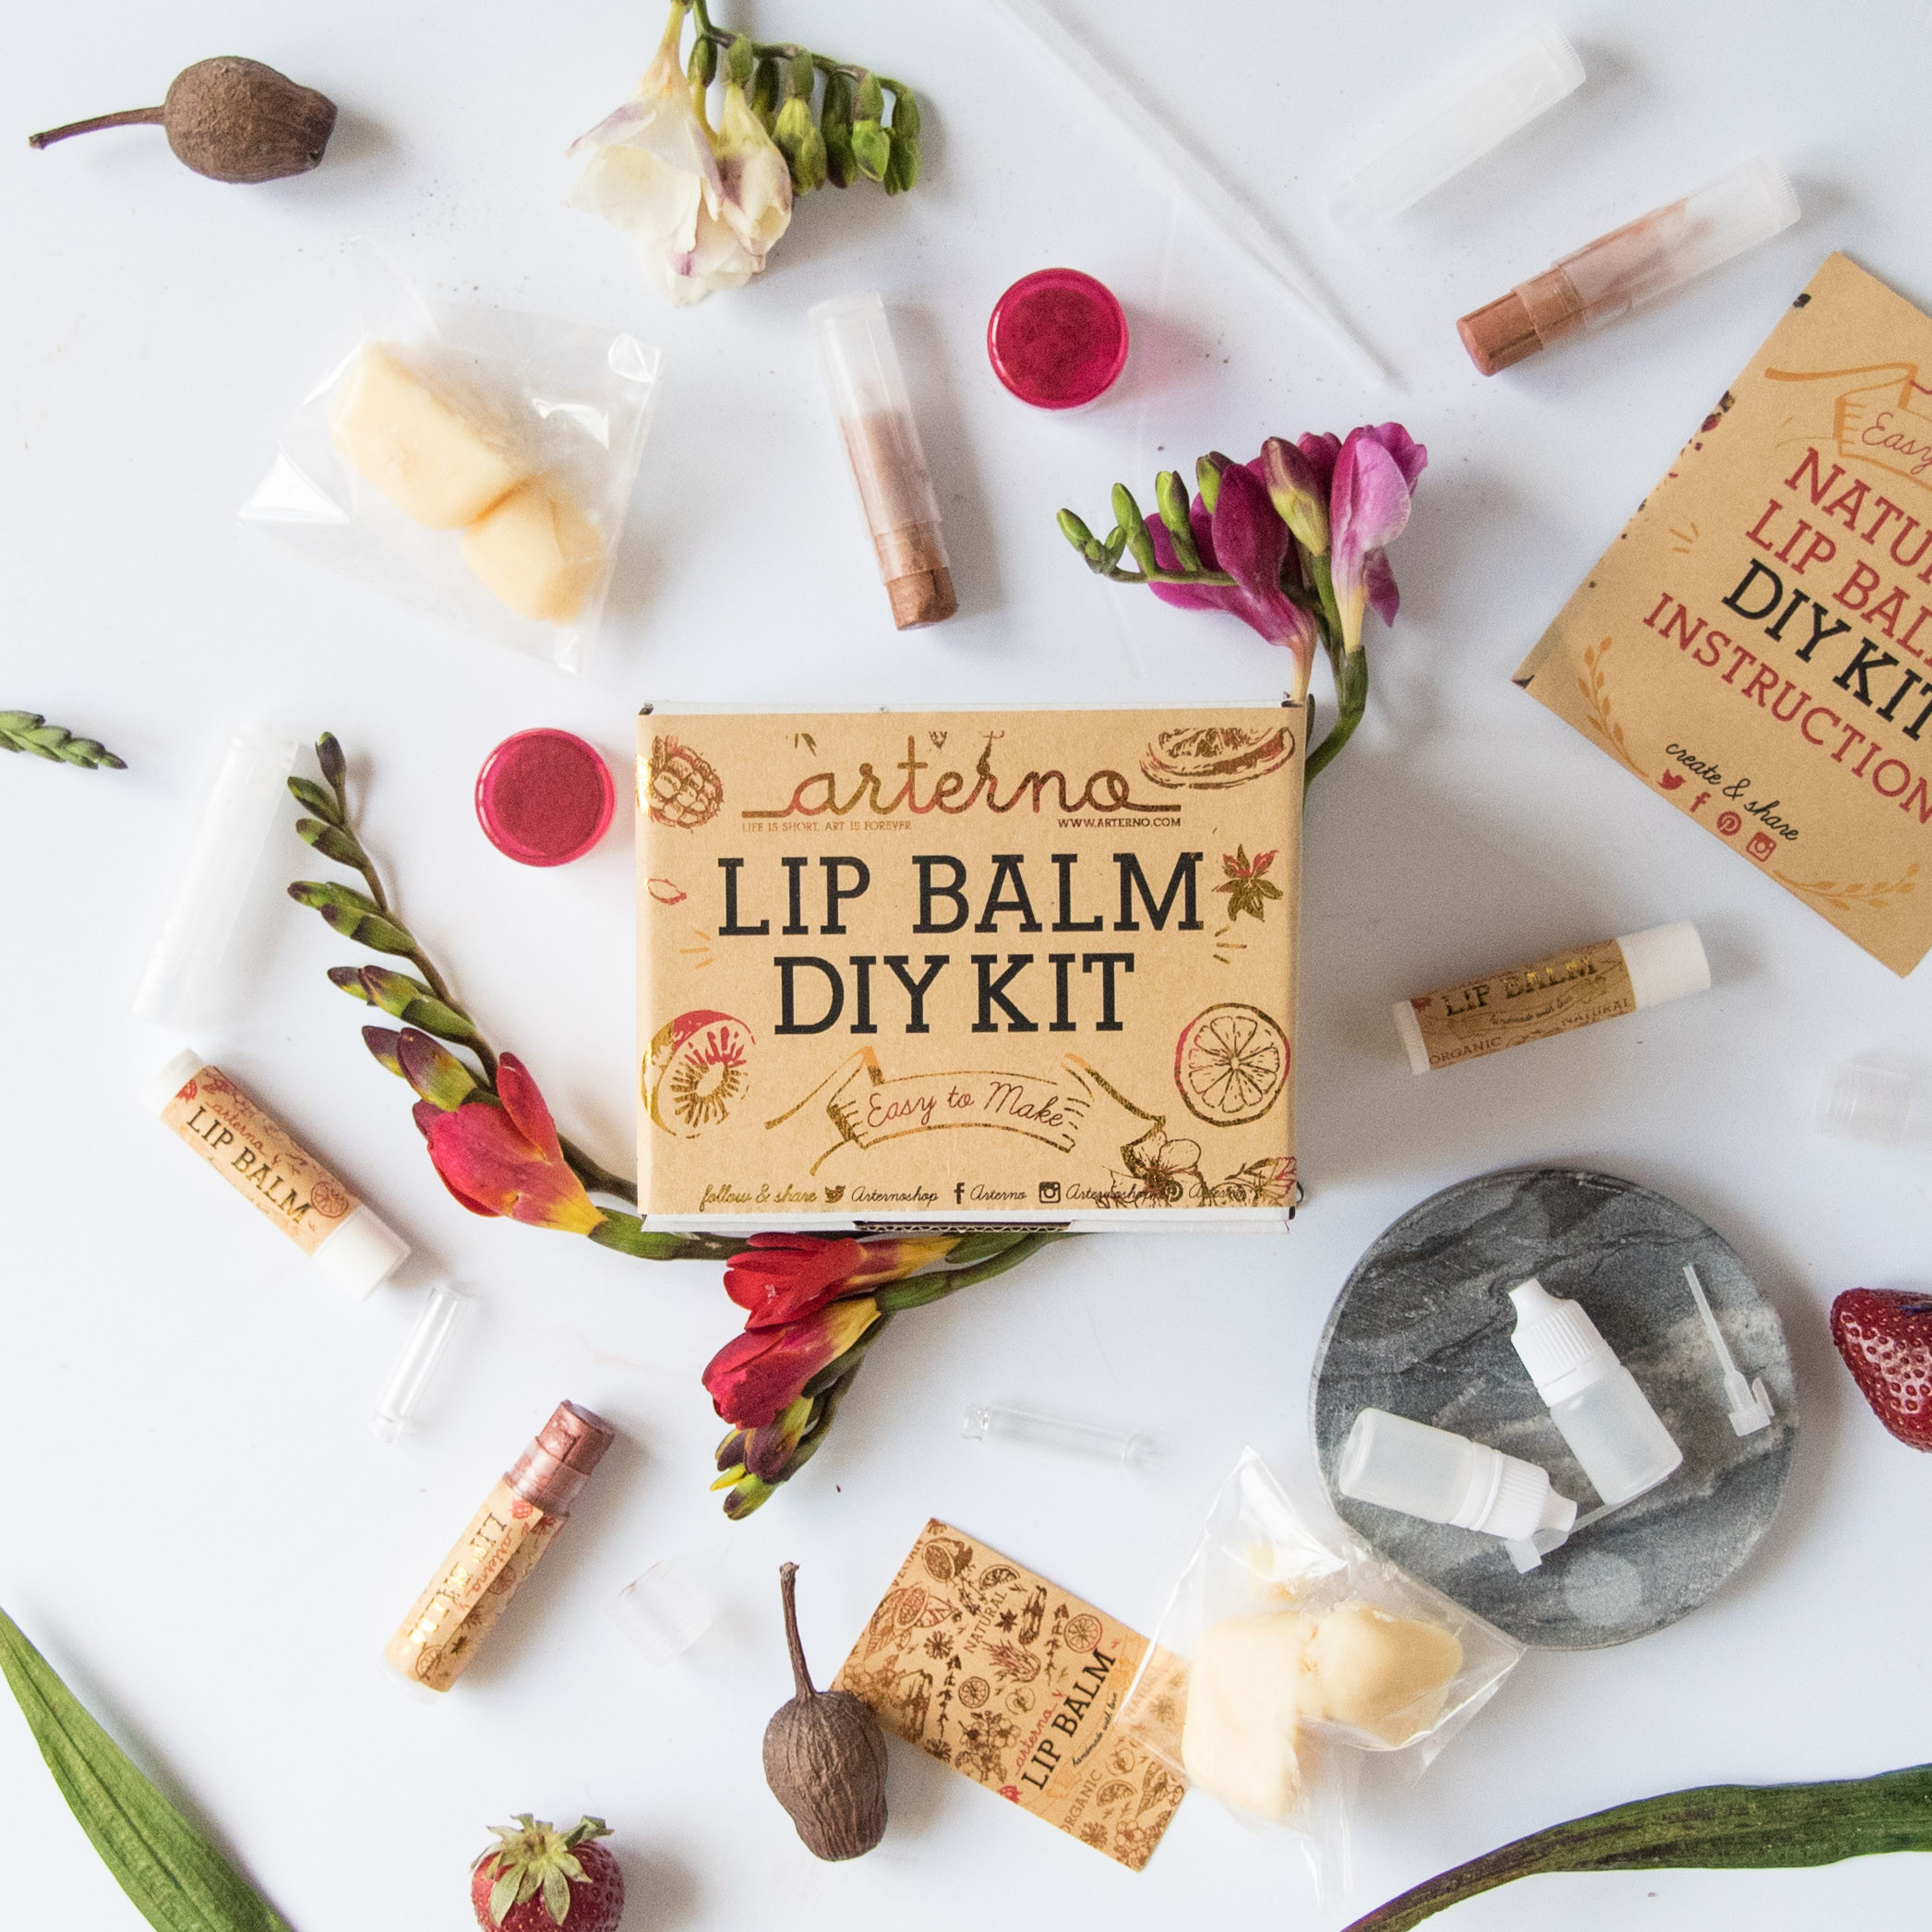 Best ideas about DIY Lip Balm Kits
. Save or Pin DIY Lip Balm Organic Kit – ARTERNO Now.